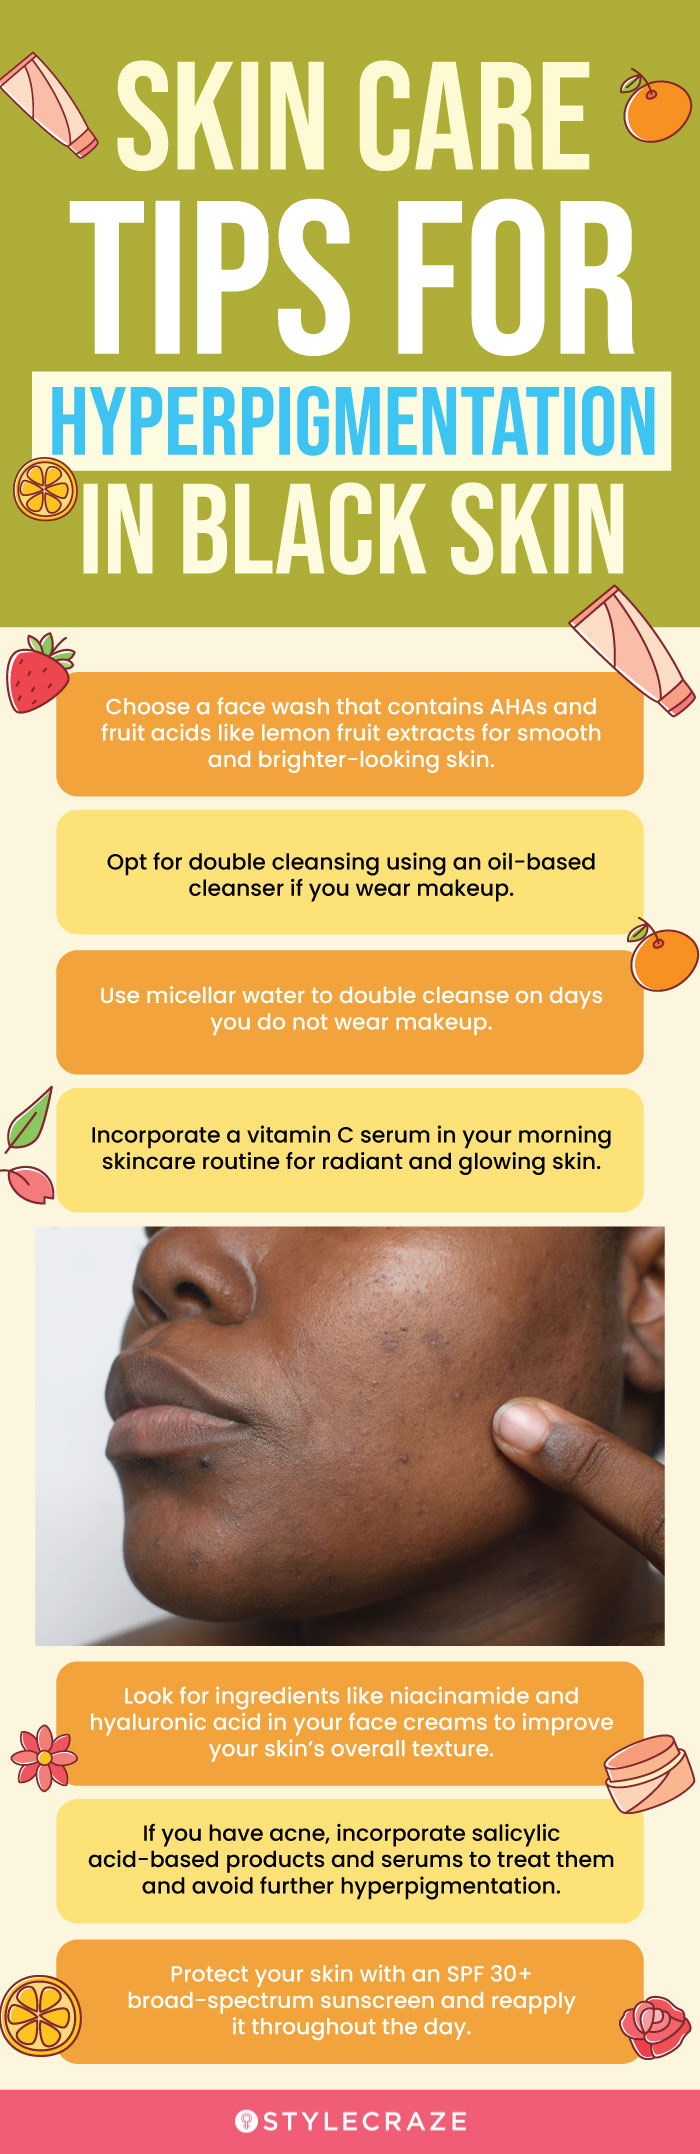 Skin Care Tips For Hyperpigmentation In Black Skin (infographic)